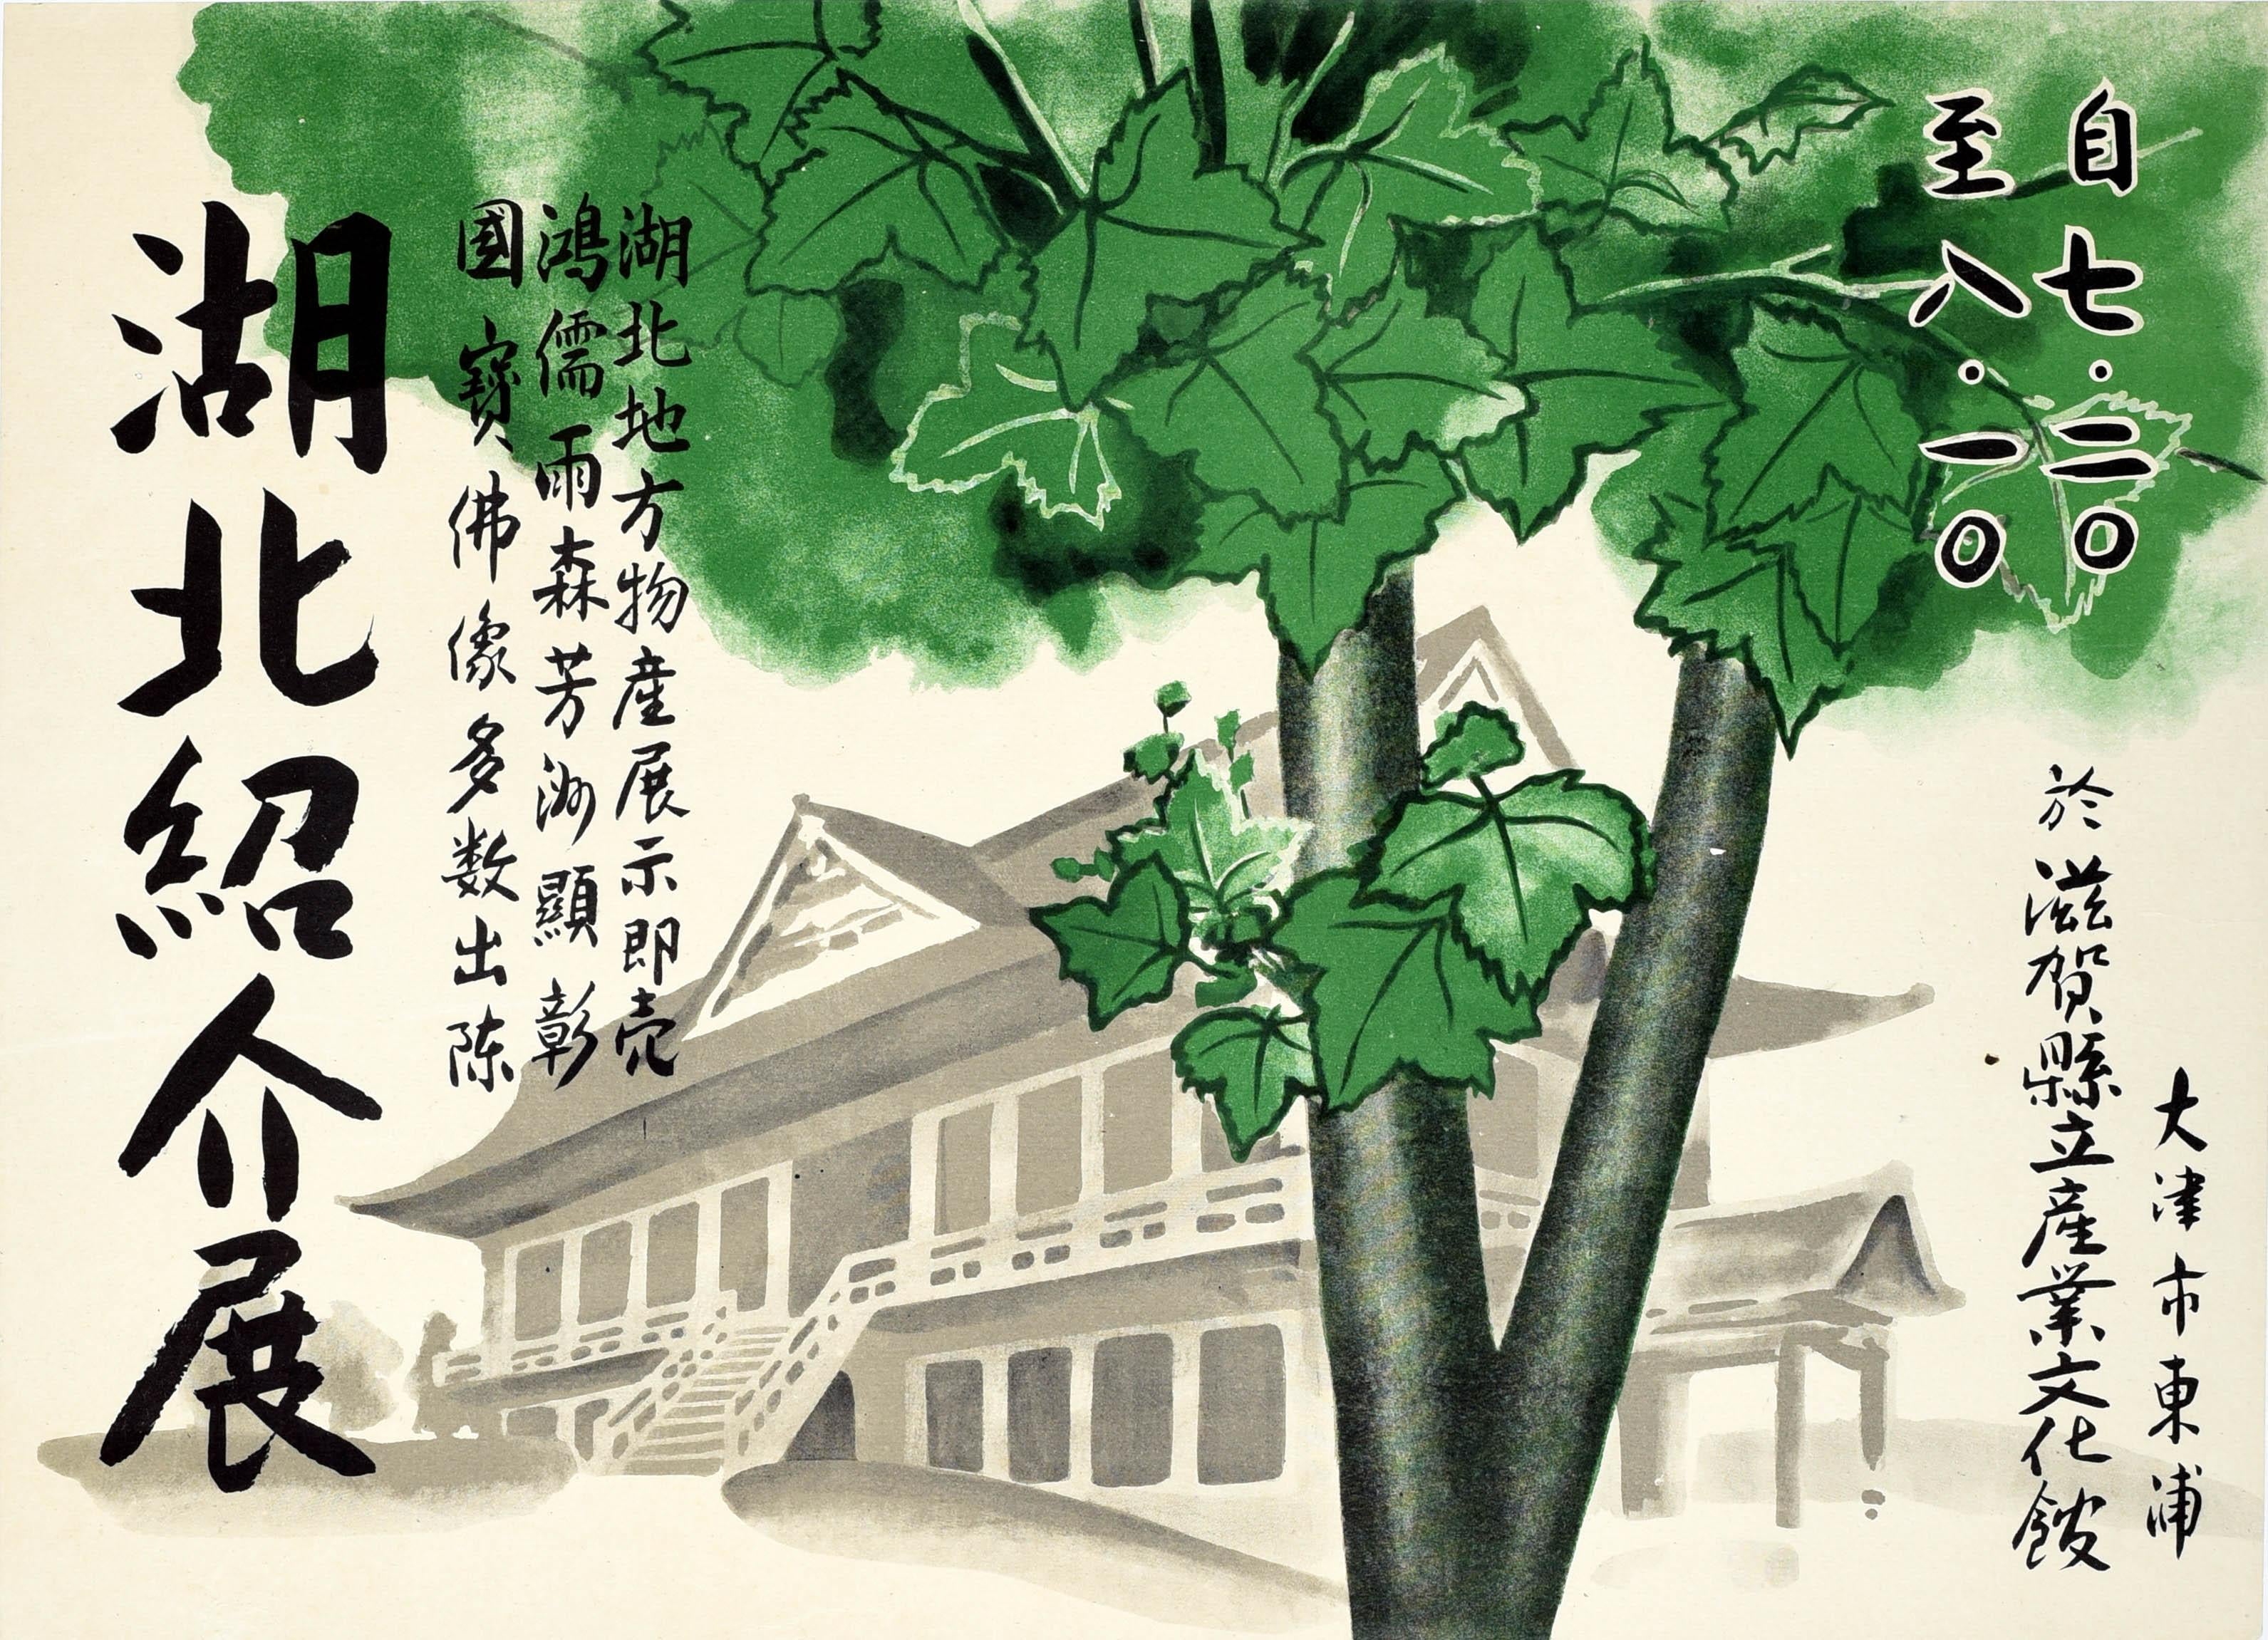 Unknown Print - Original Vintage Advertising Poster Artifacts Exhibition Otsu Shiga Japan Design